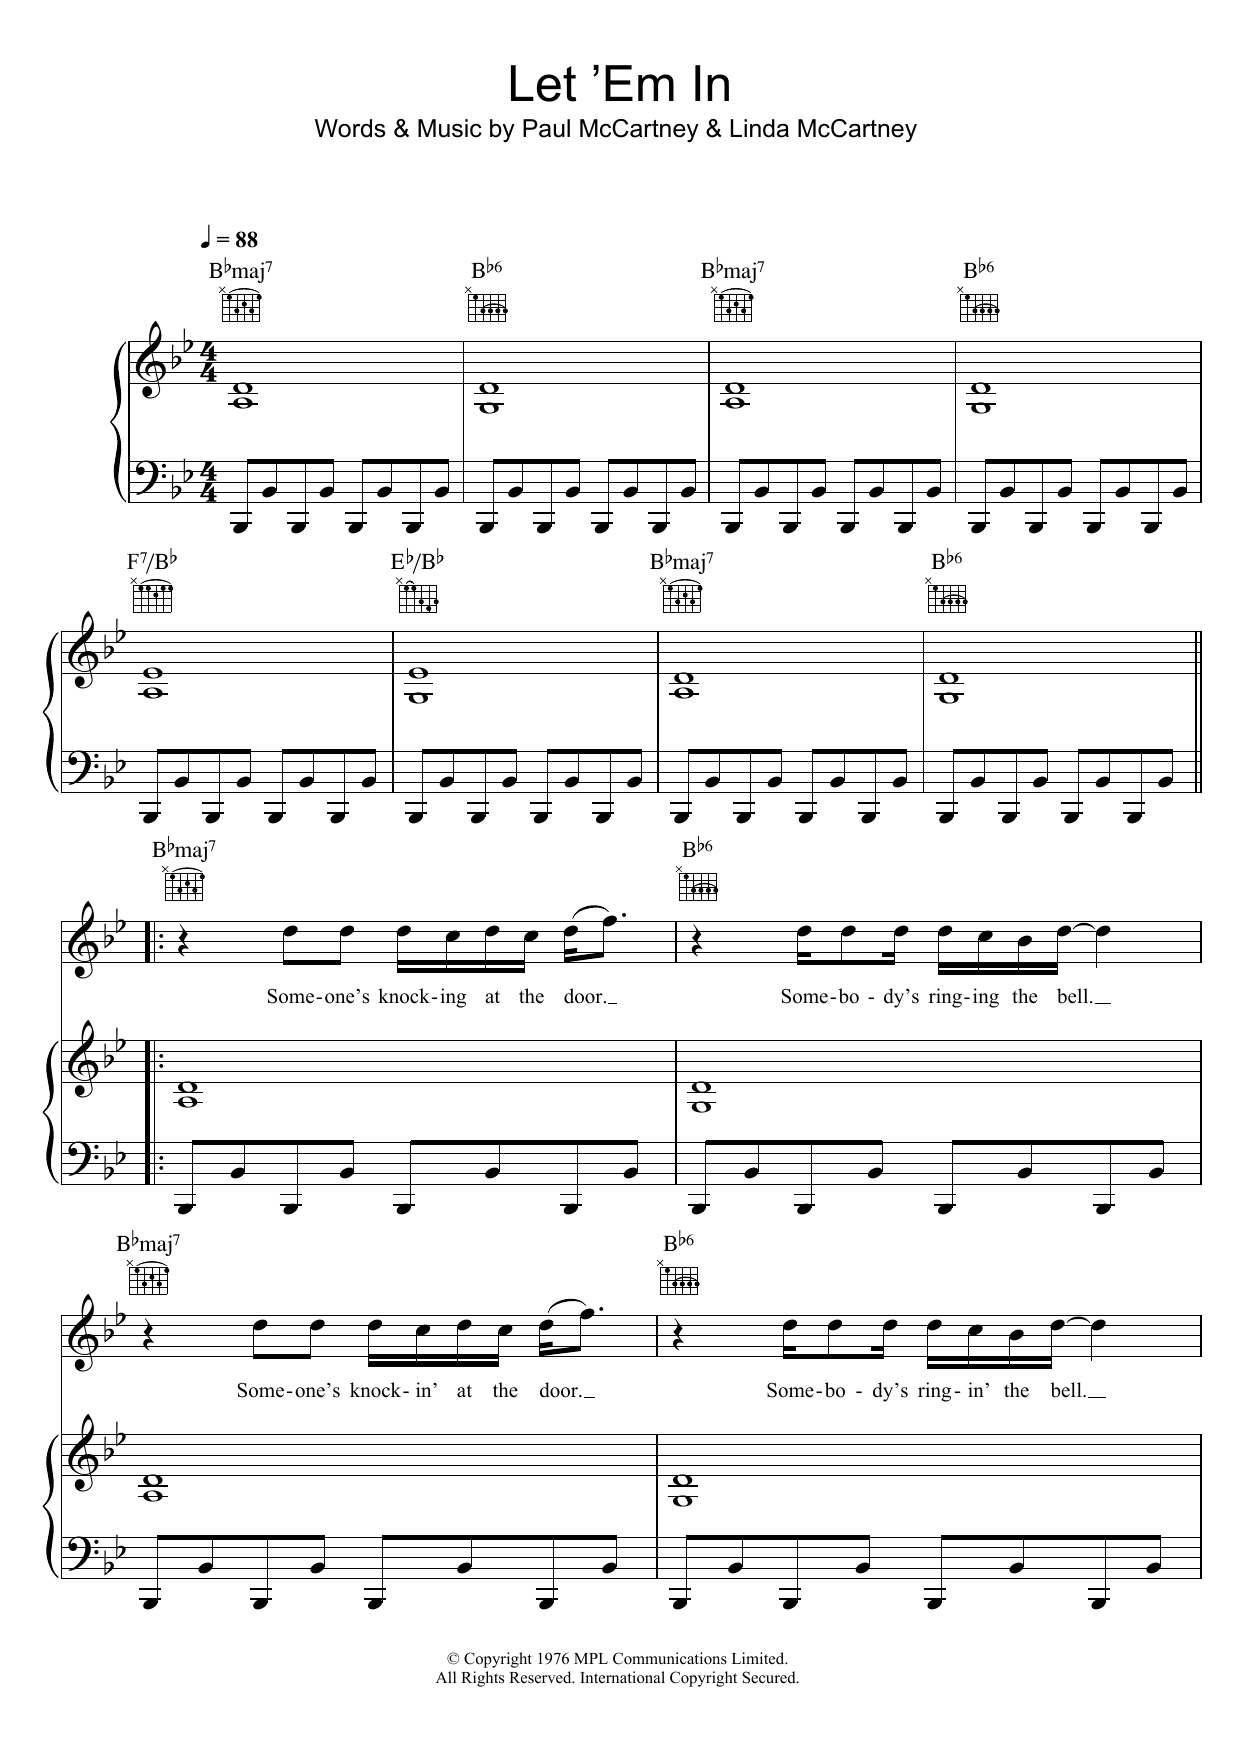 Wings Let 'Em In Sheet Music Notes & Chords for Violin - Download or Print PDF